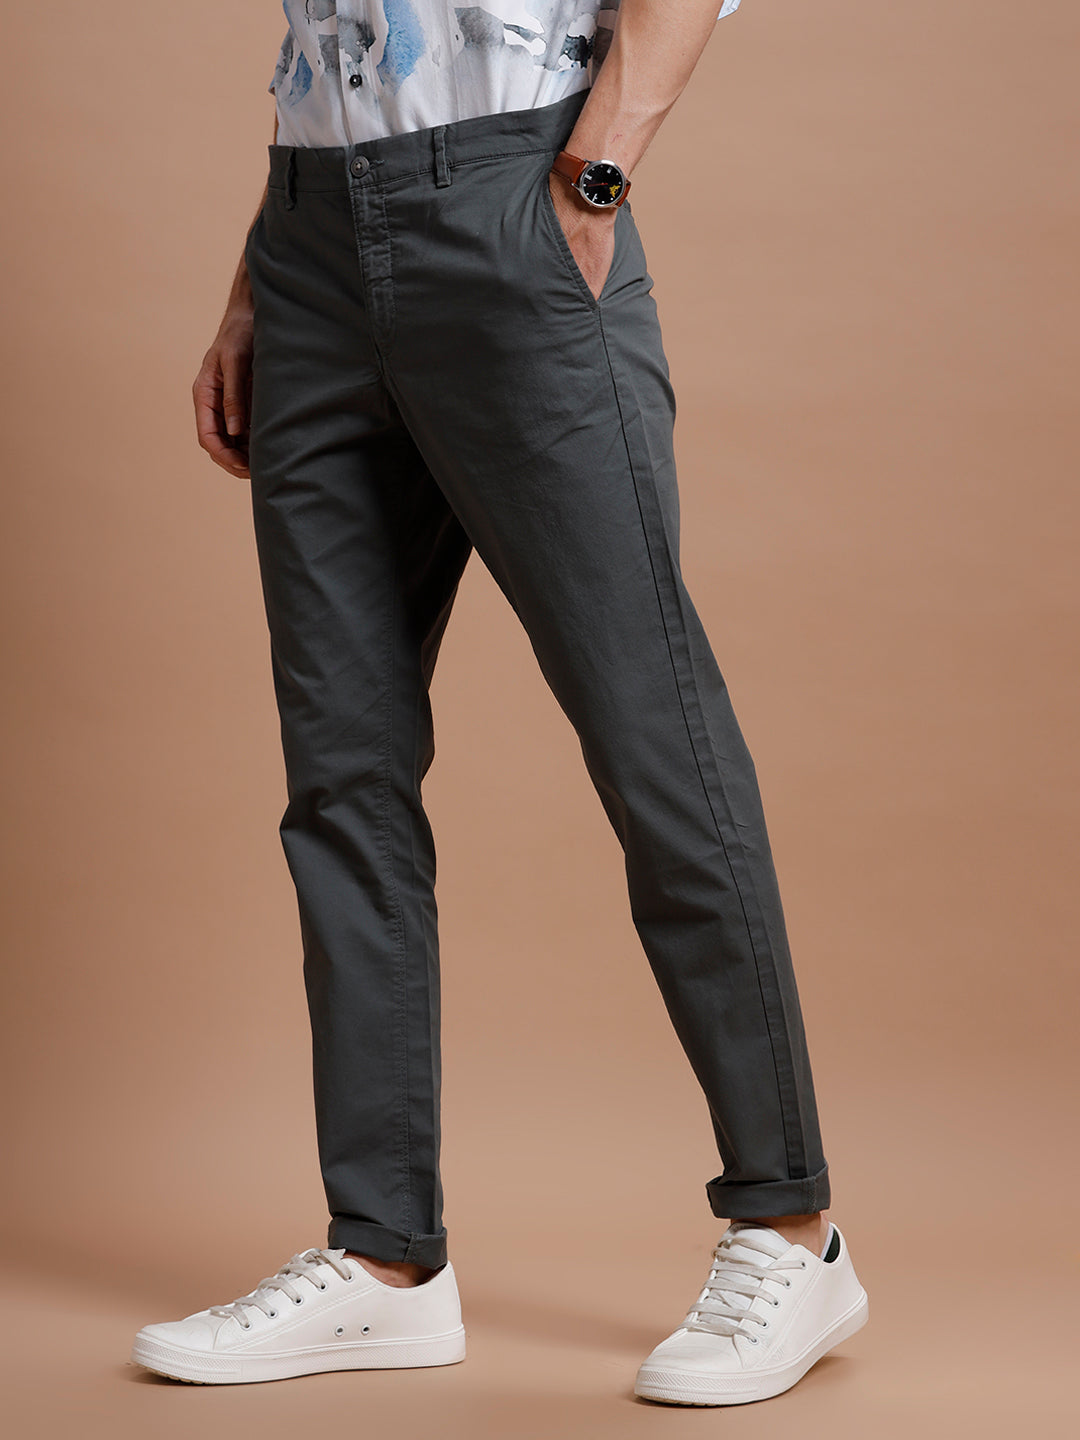 Dk Grey  Smart Casual Cotton Trouser